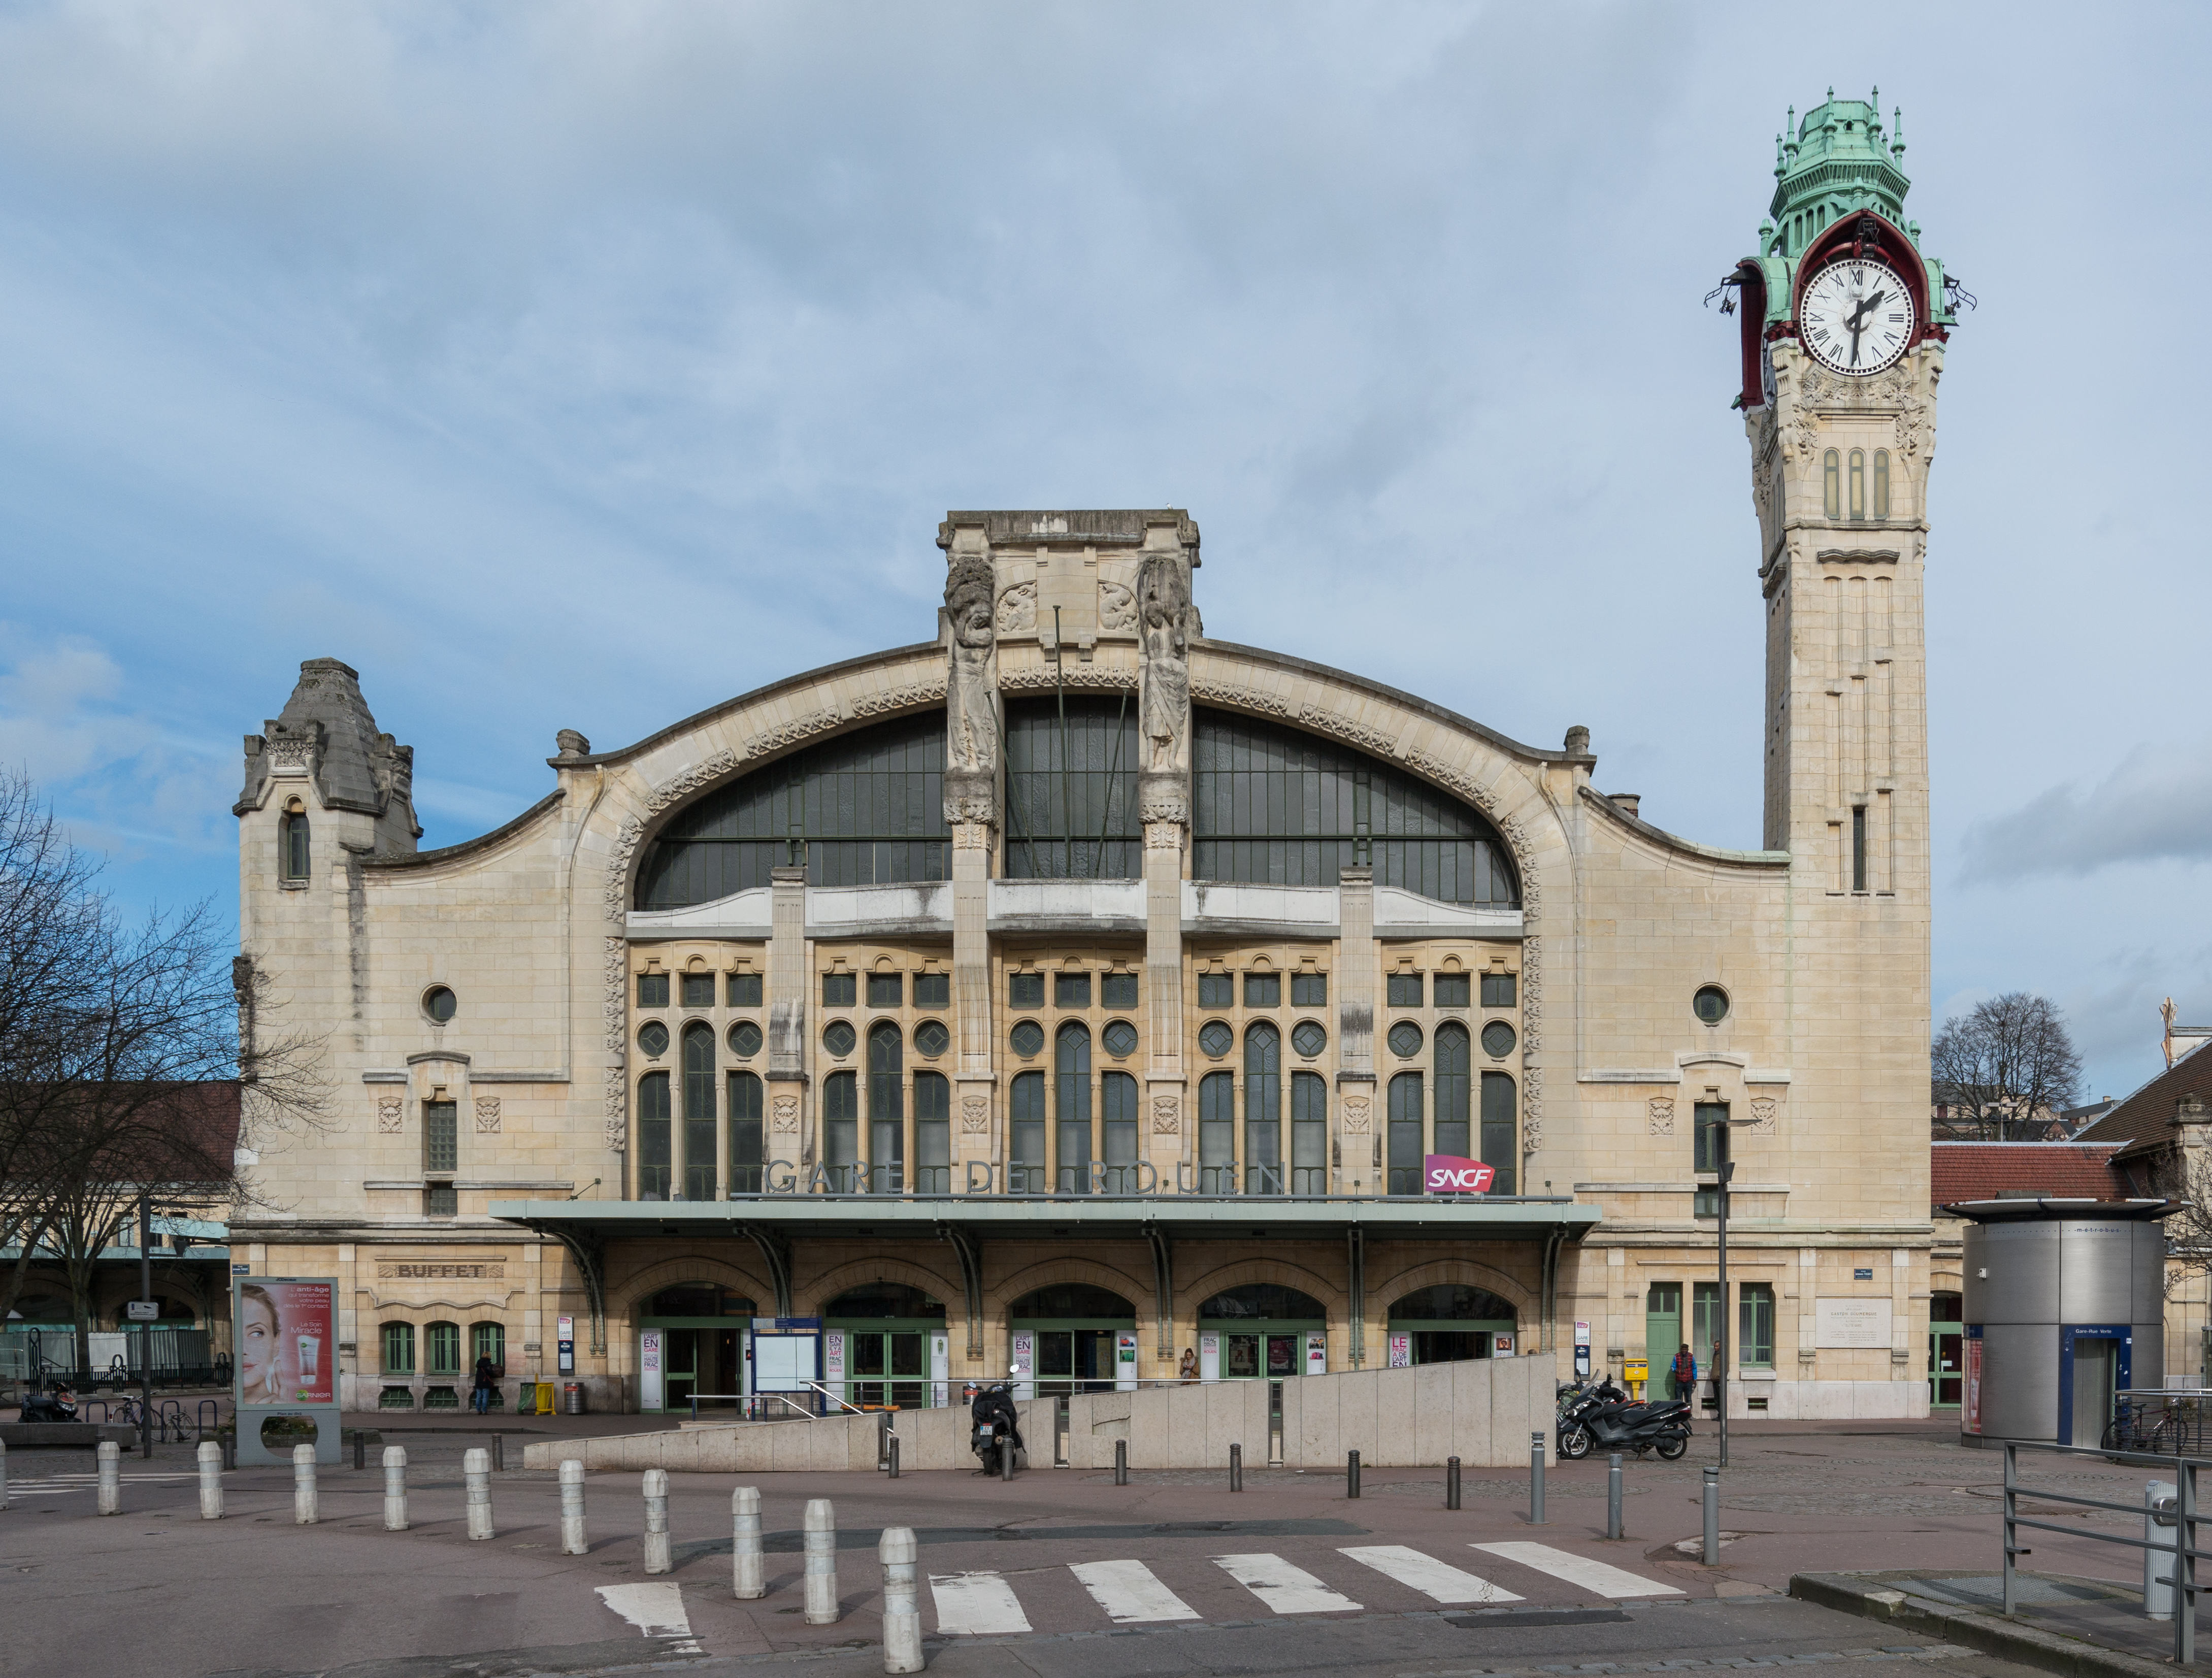 Gare de Rouen Rive-Droite, South View 140215 1